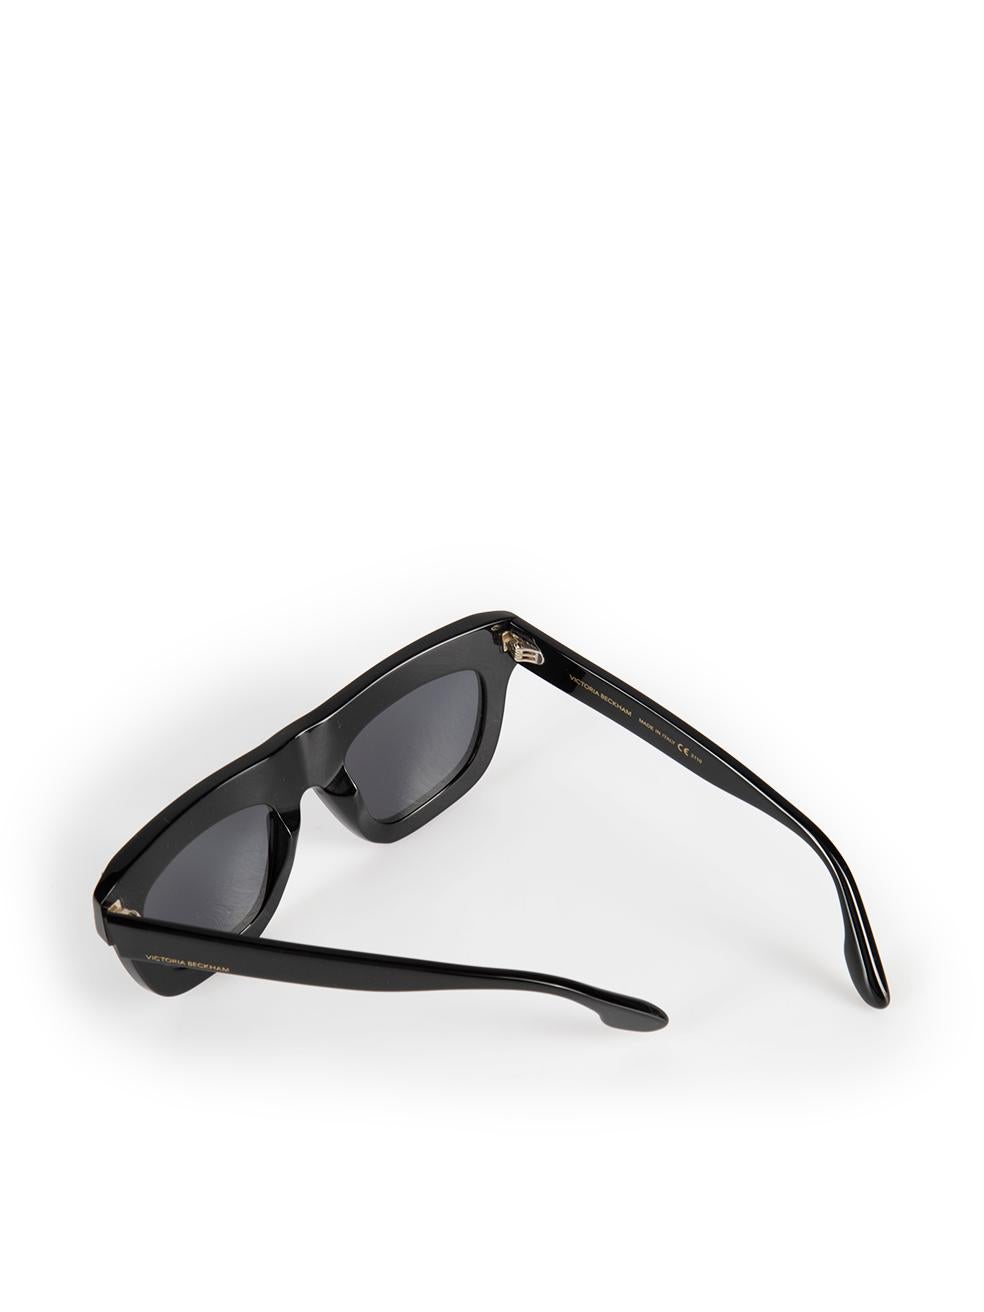 Victoria Beckham Black Browline Tinted Sunglasses For Sale 4